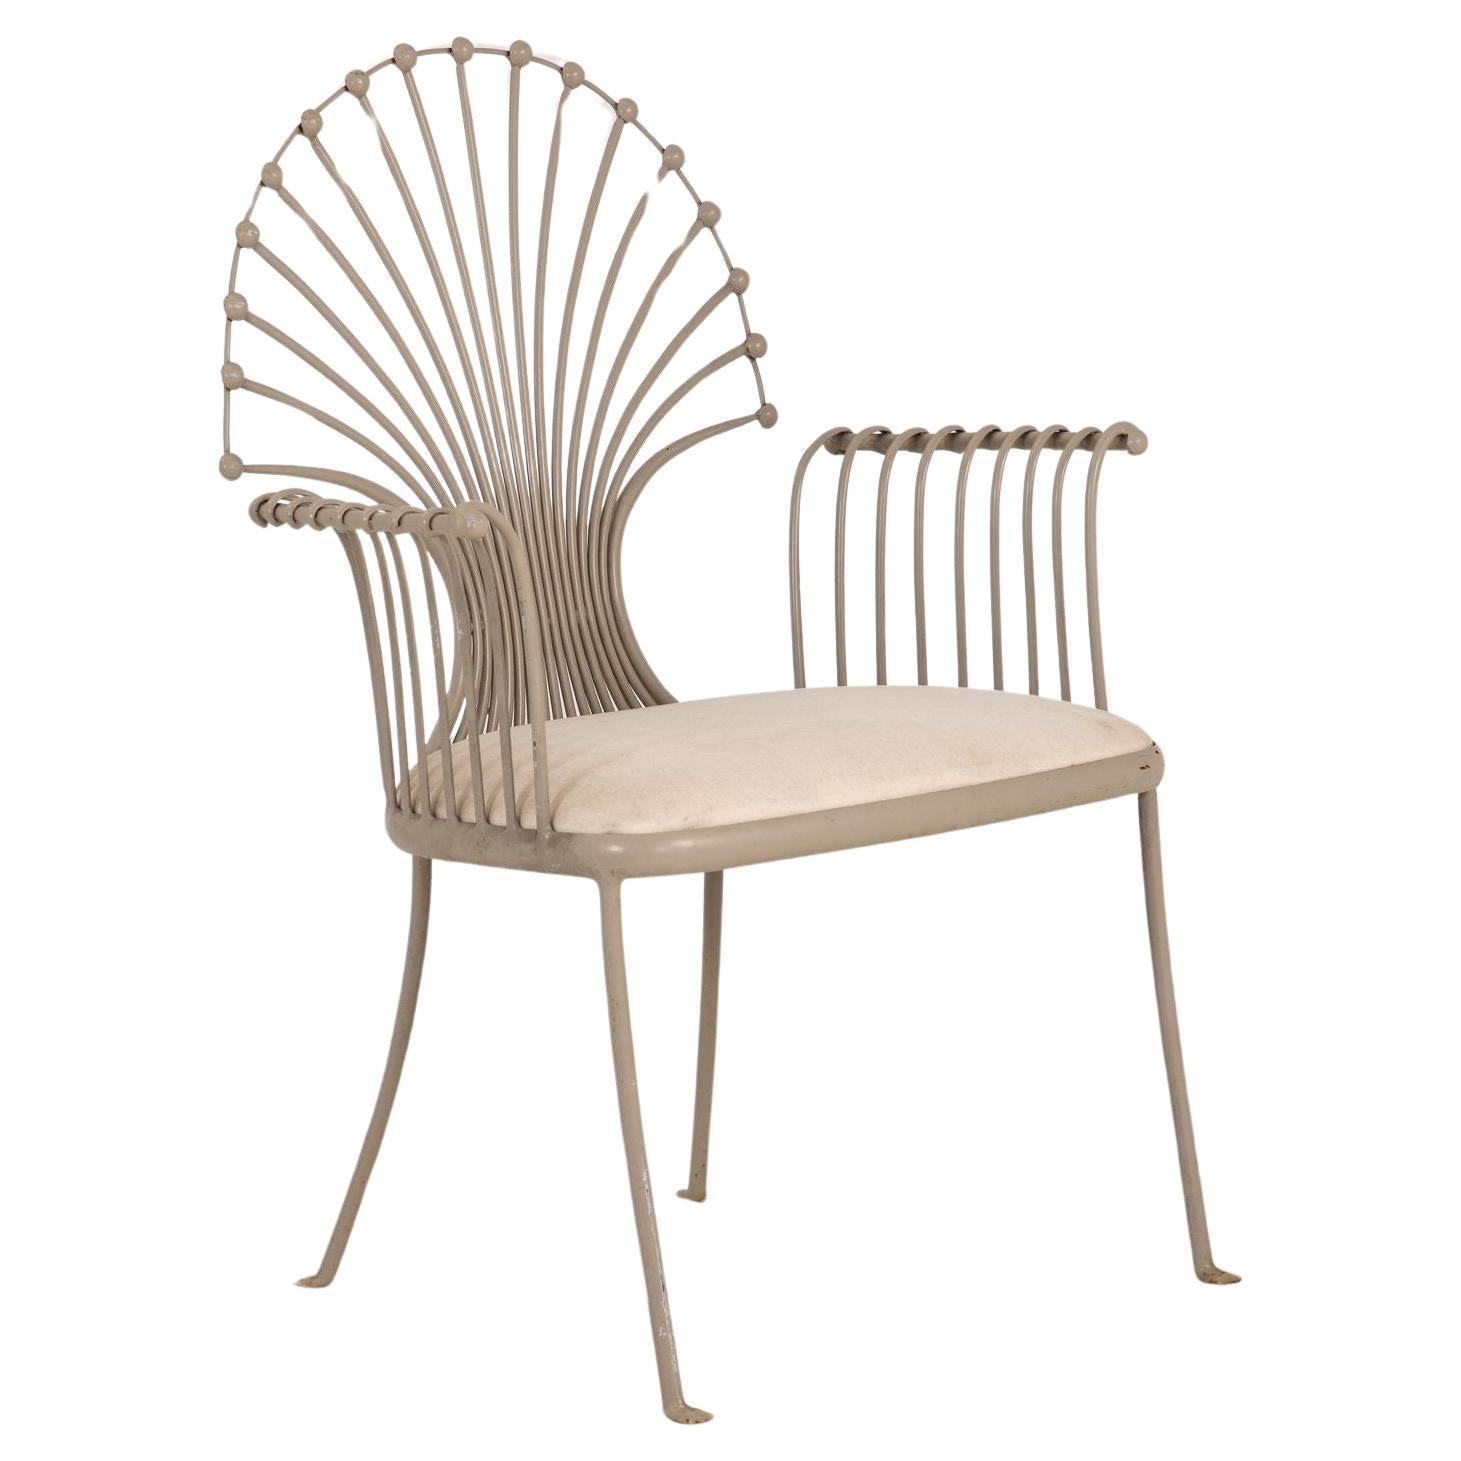 Sessel mit Pfauen- oder Weizengarbenblattmotiv, grau lackiertes Aluminium, Sessel im Angebot